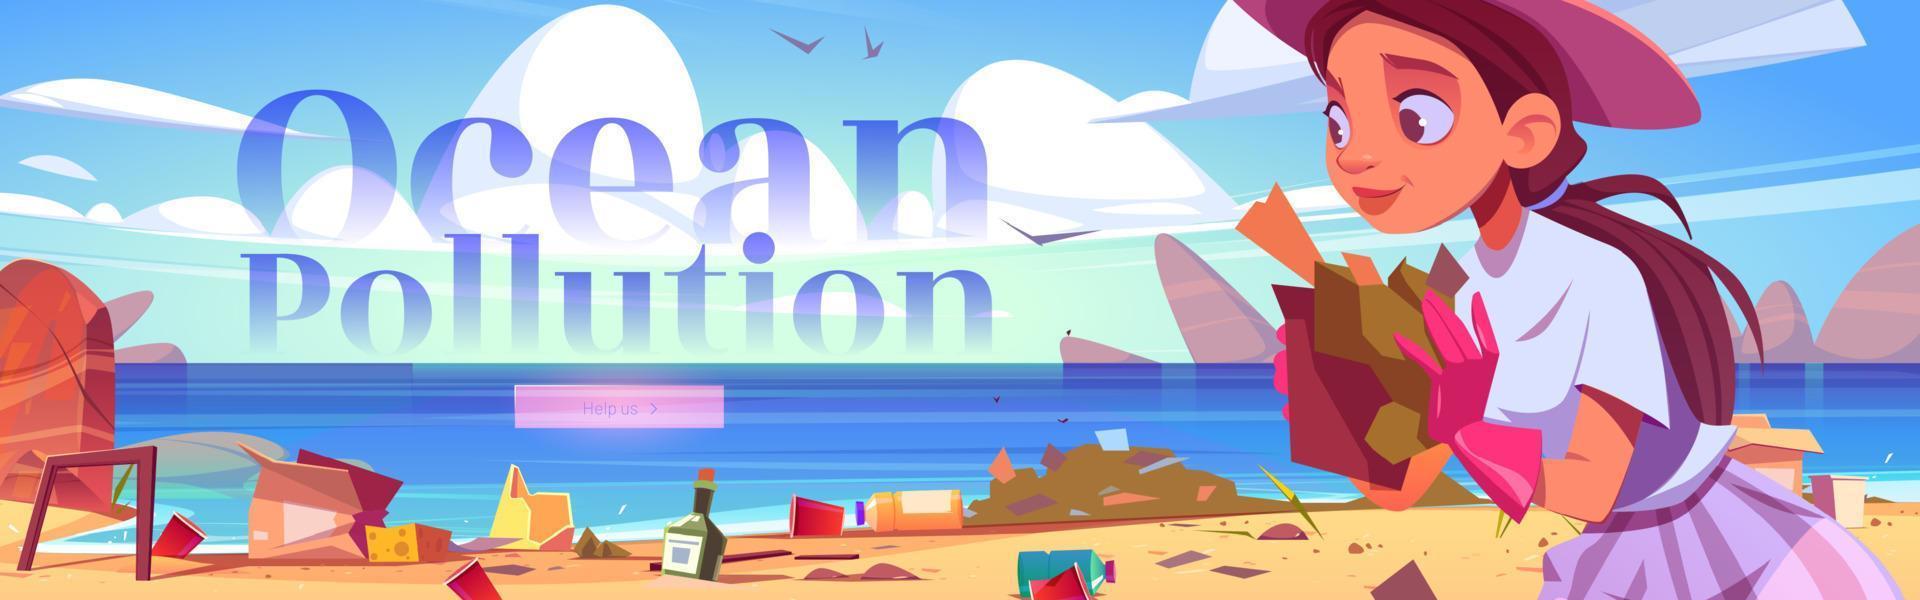 Ocean pollution cartoon web banner, clean up beach vector